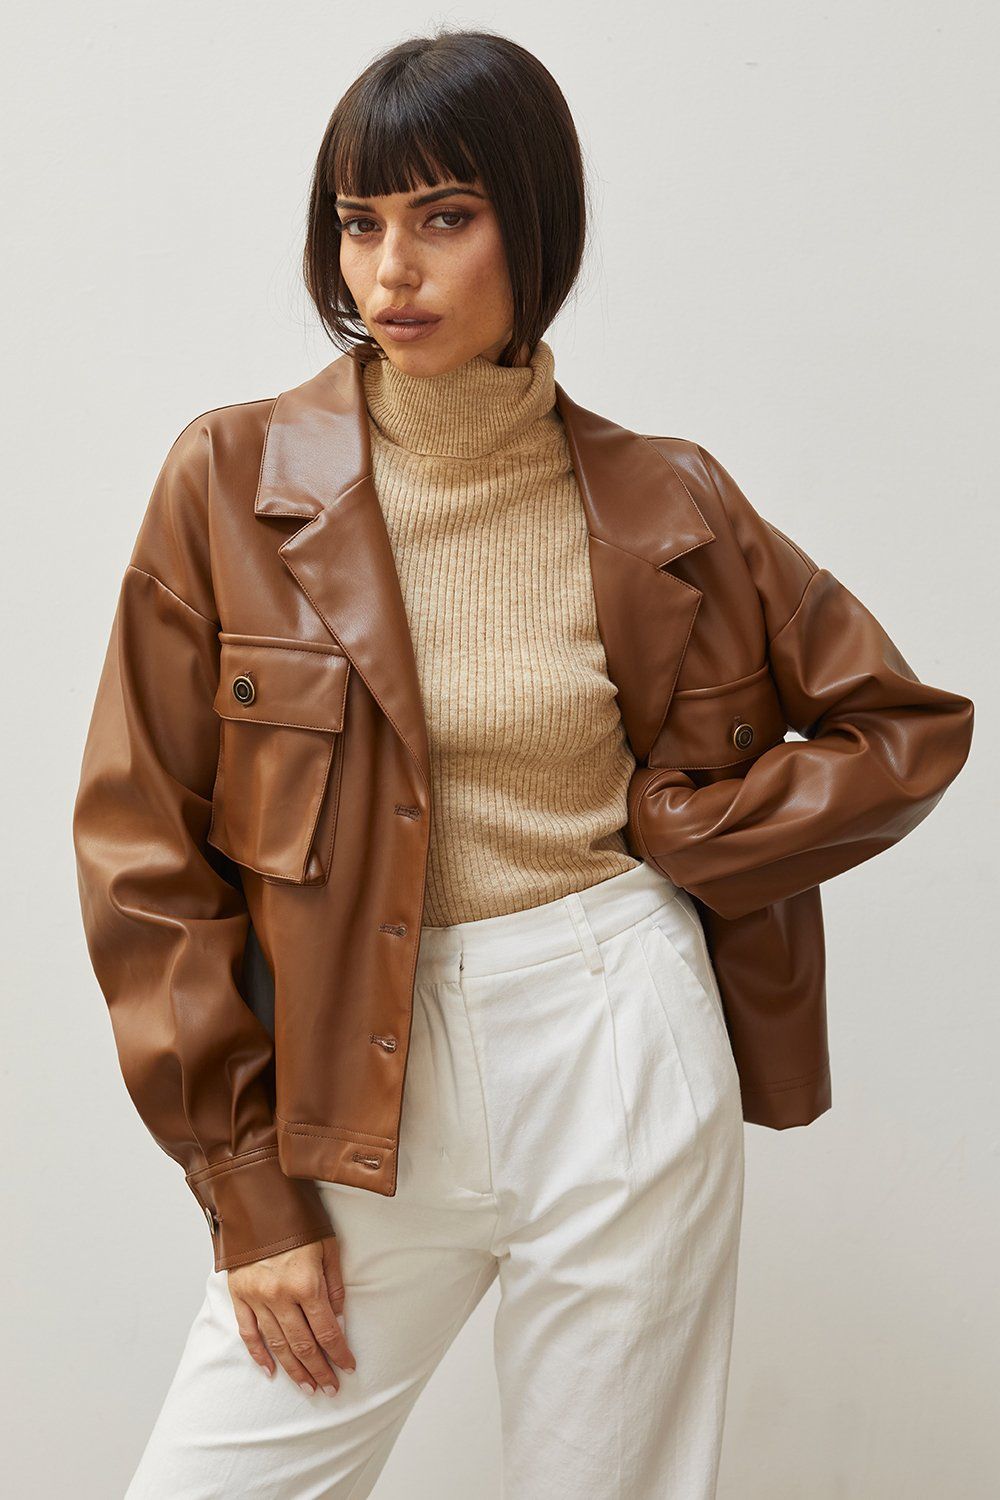 Tan Leather Jacket Women Styles For 2023 | Leatherwear